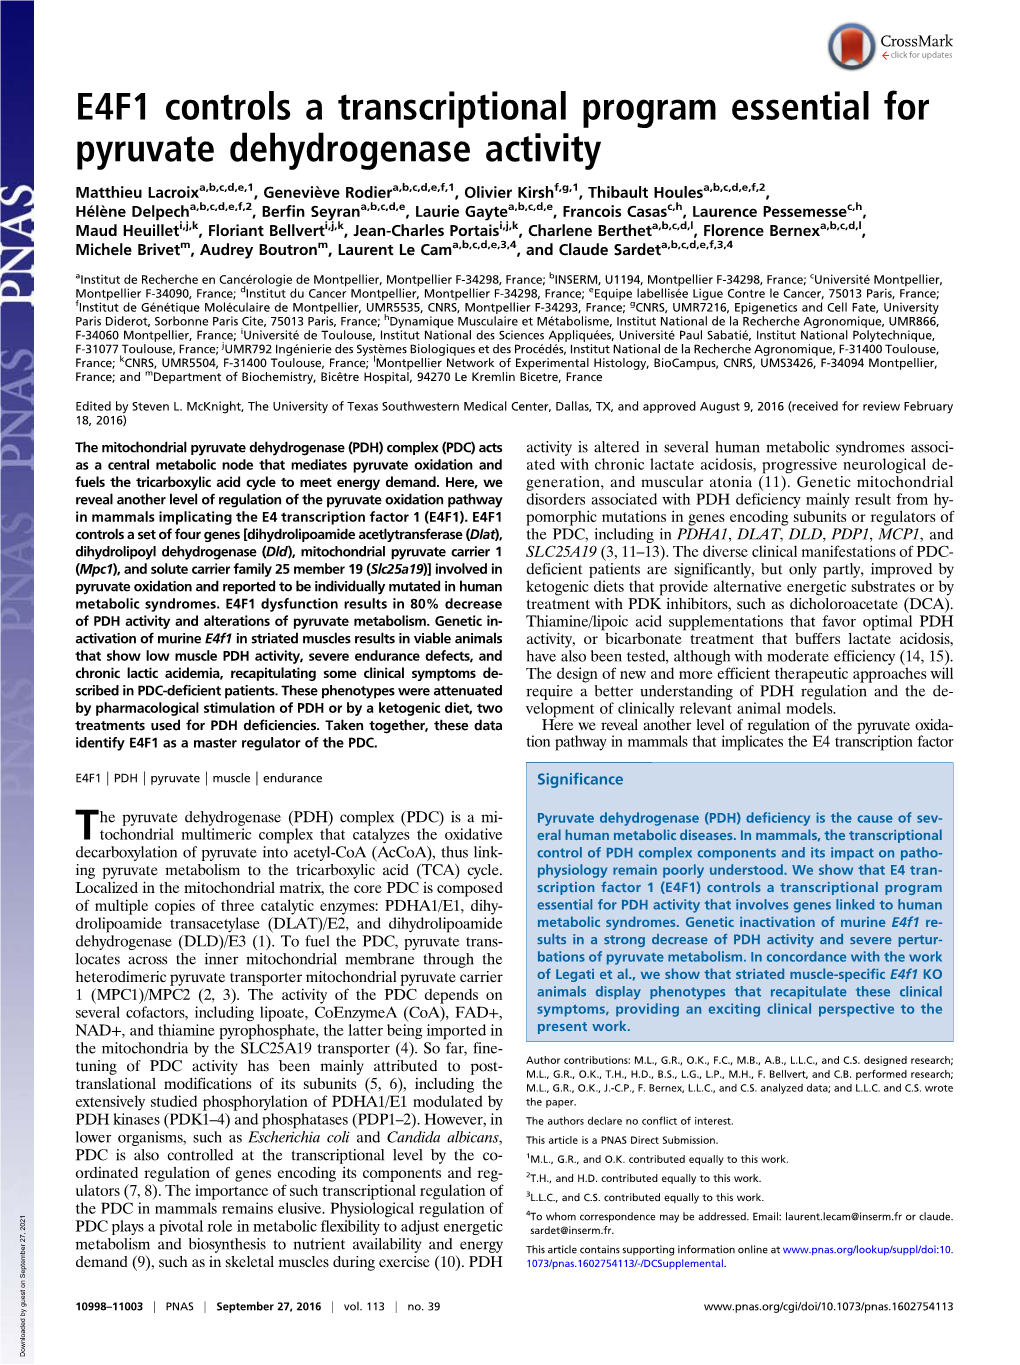 E4F1 Controls a Transcriptional Program Essential for Pyruvate Dehydrogenase Activity